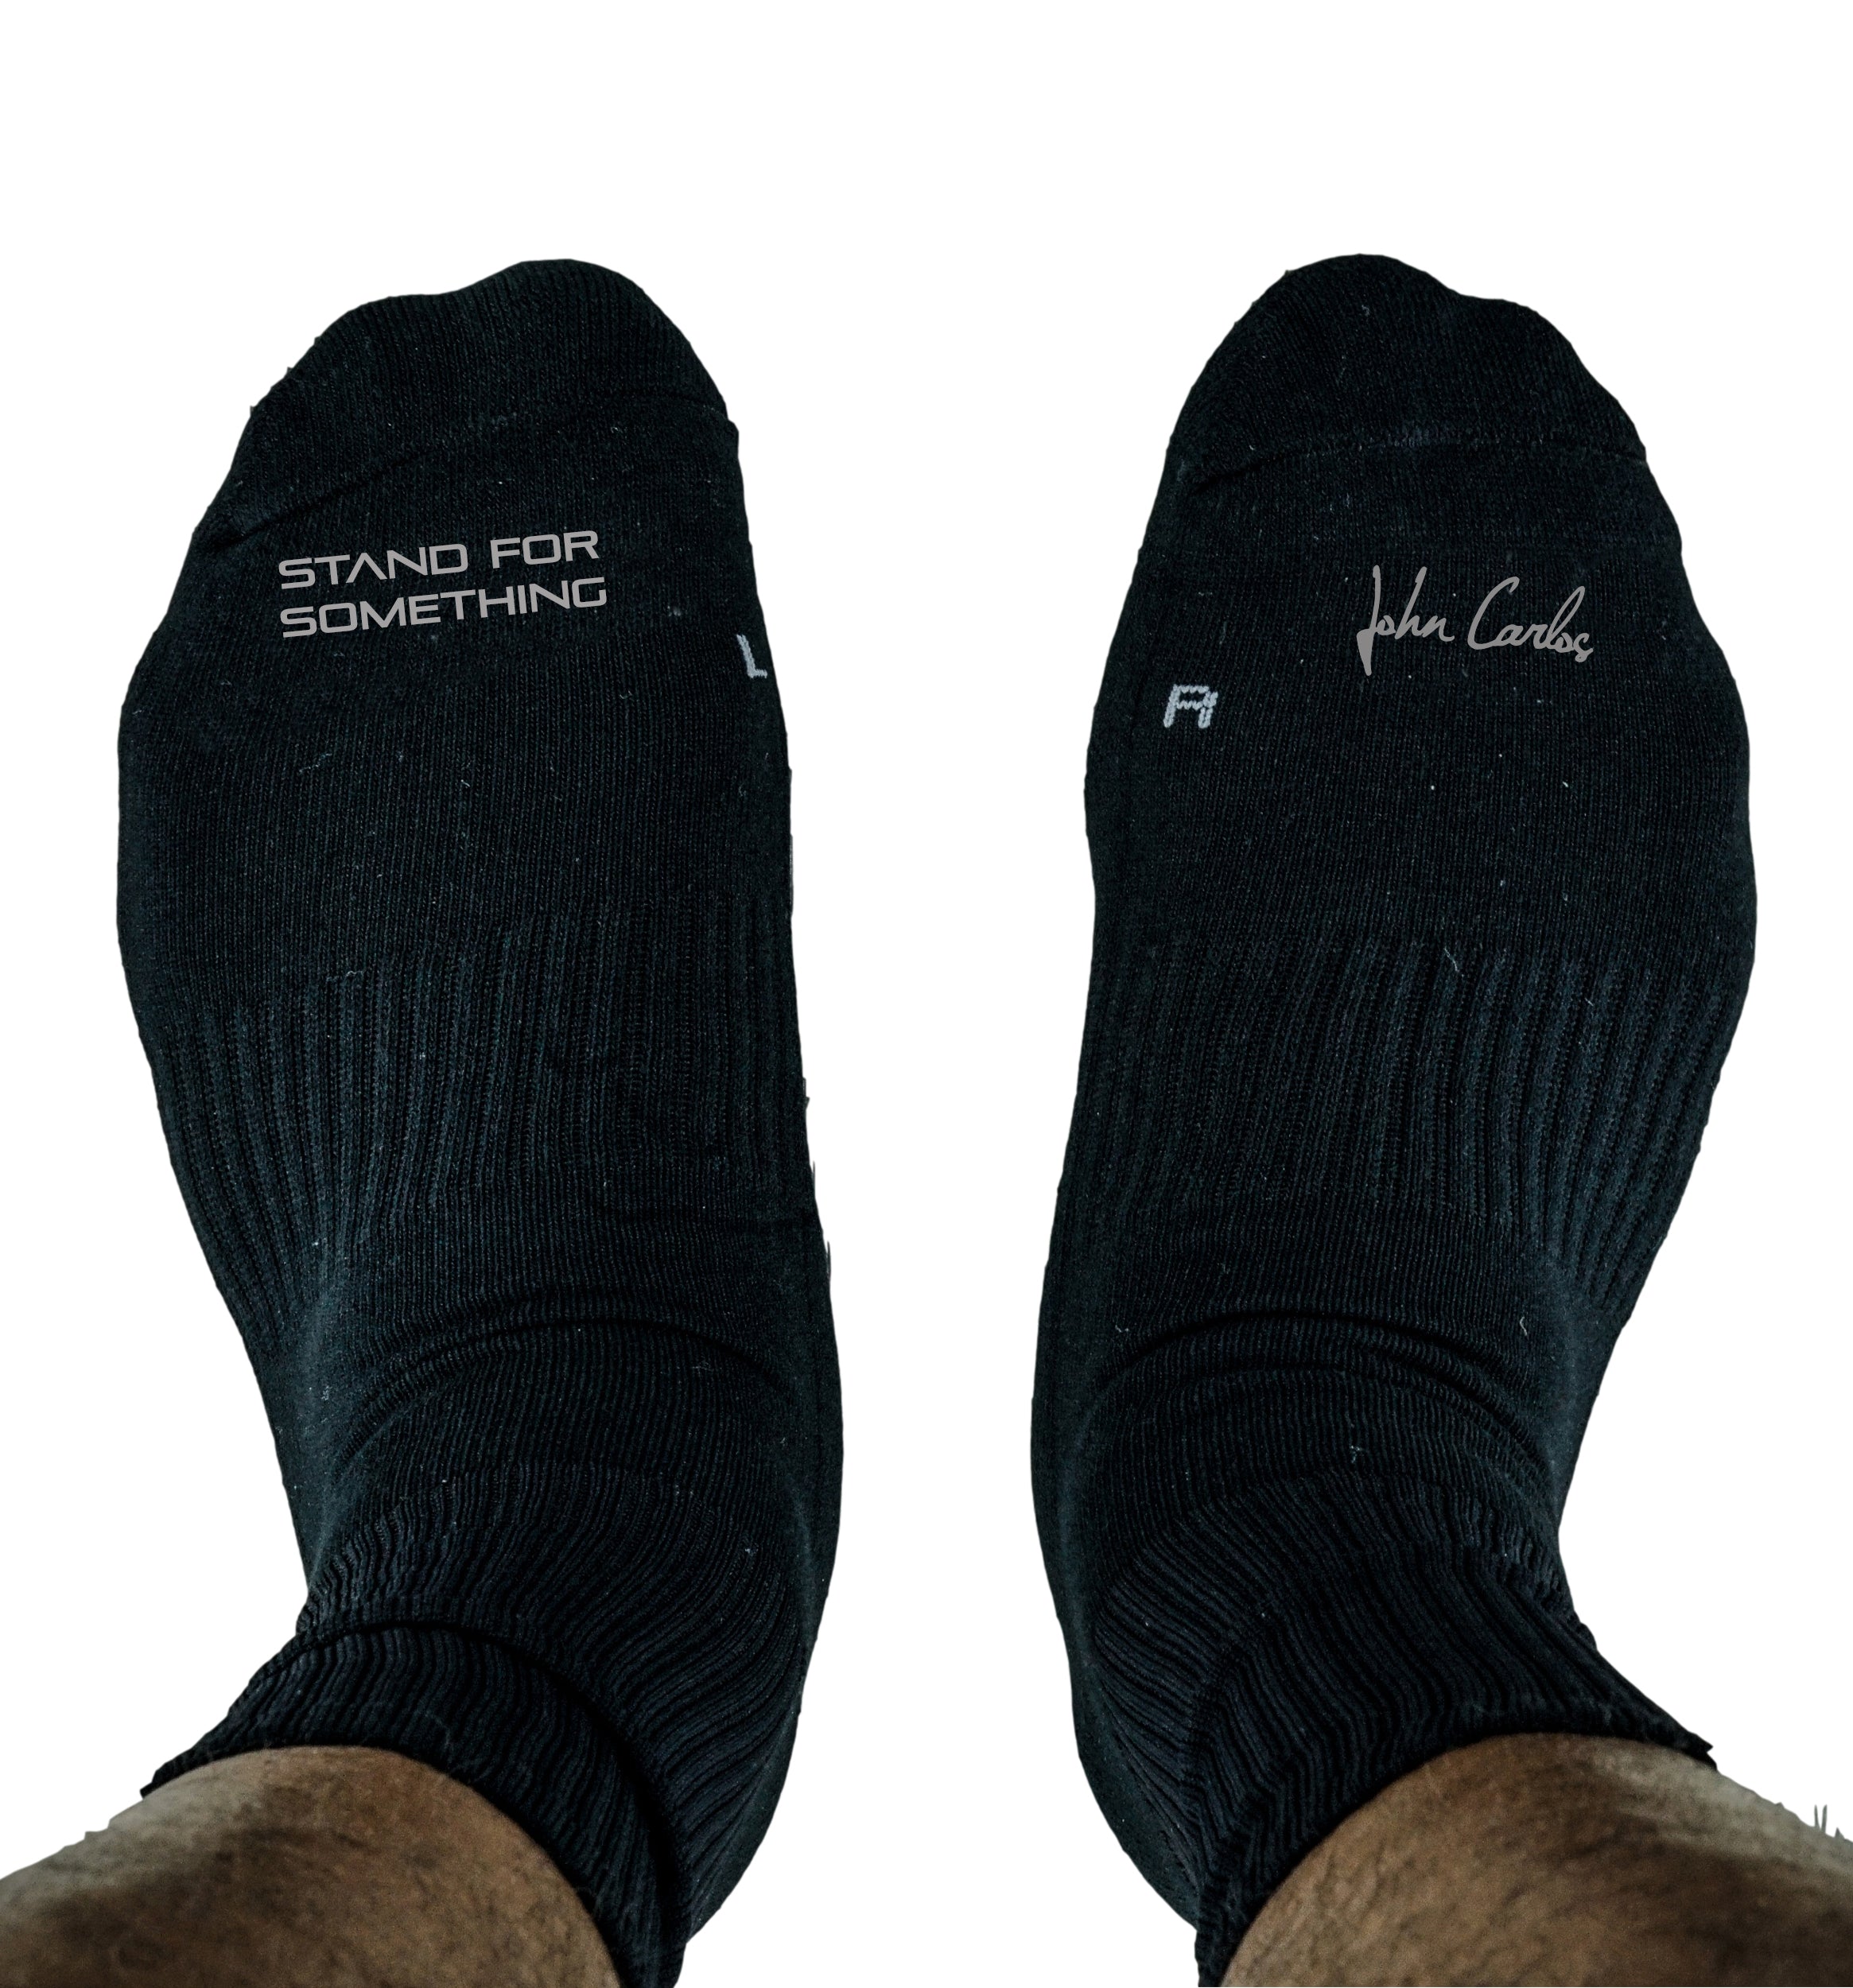 John Carlos x Actively Black Socks